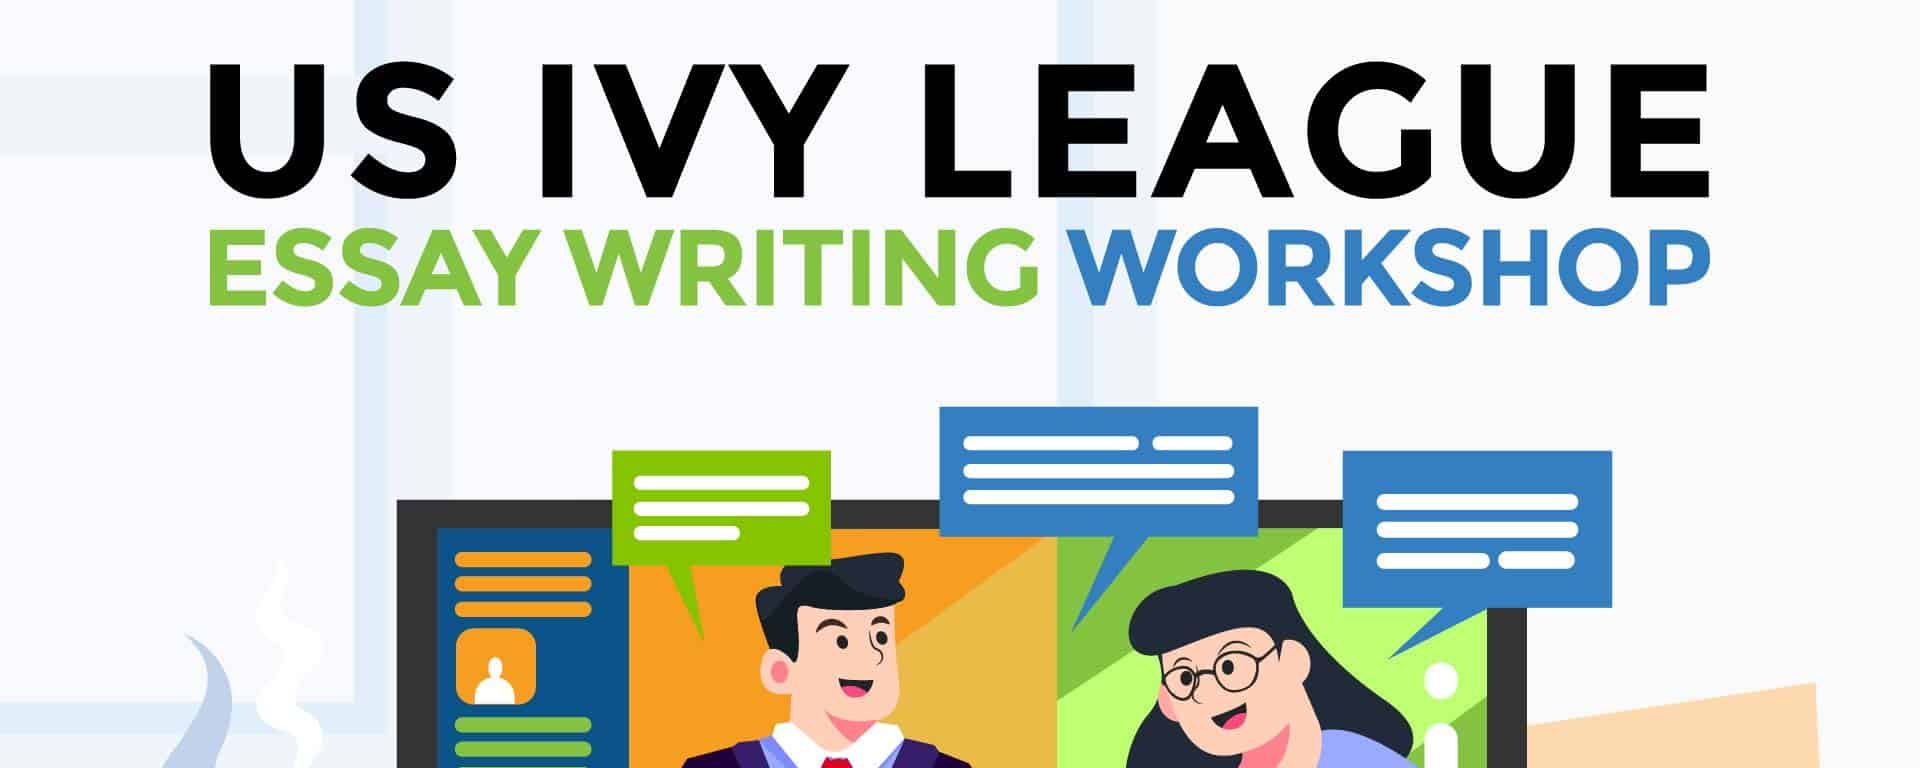 ivy league essay writer